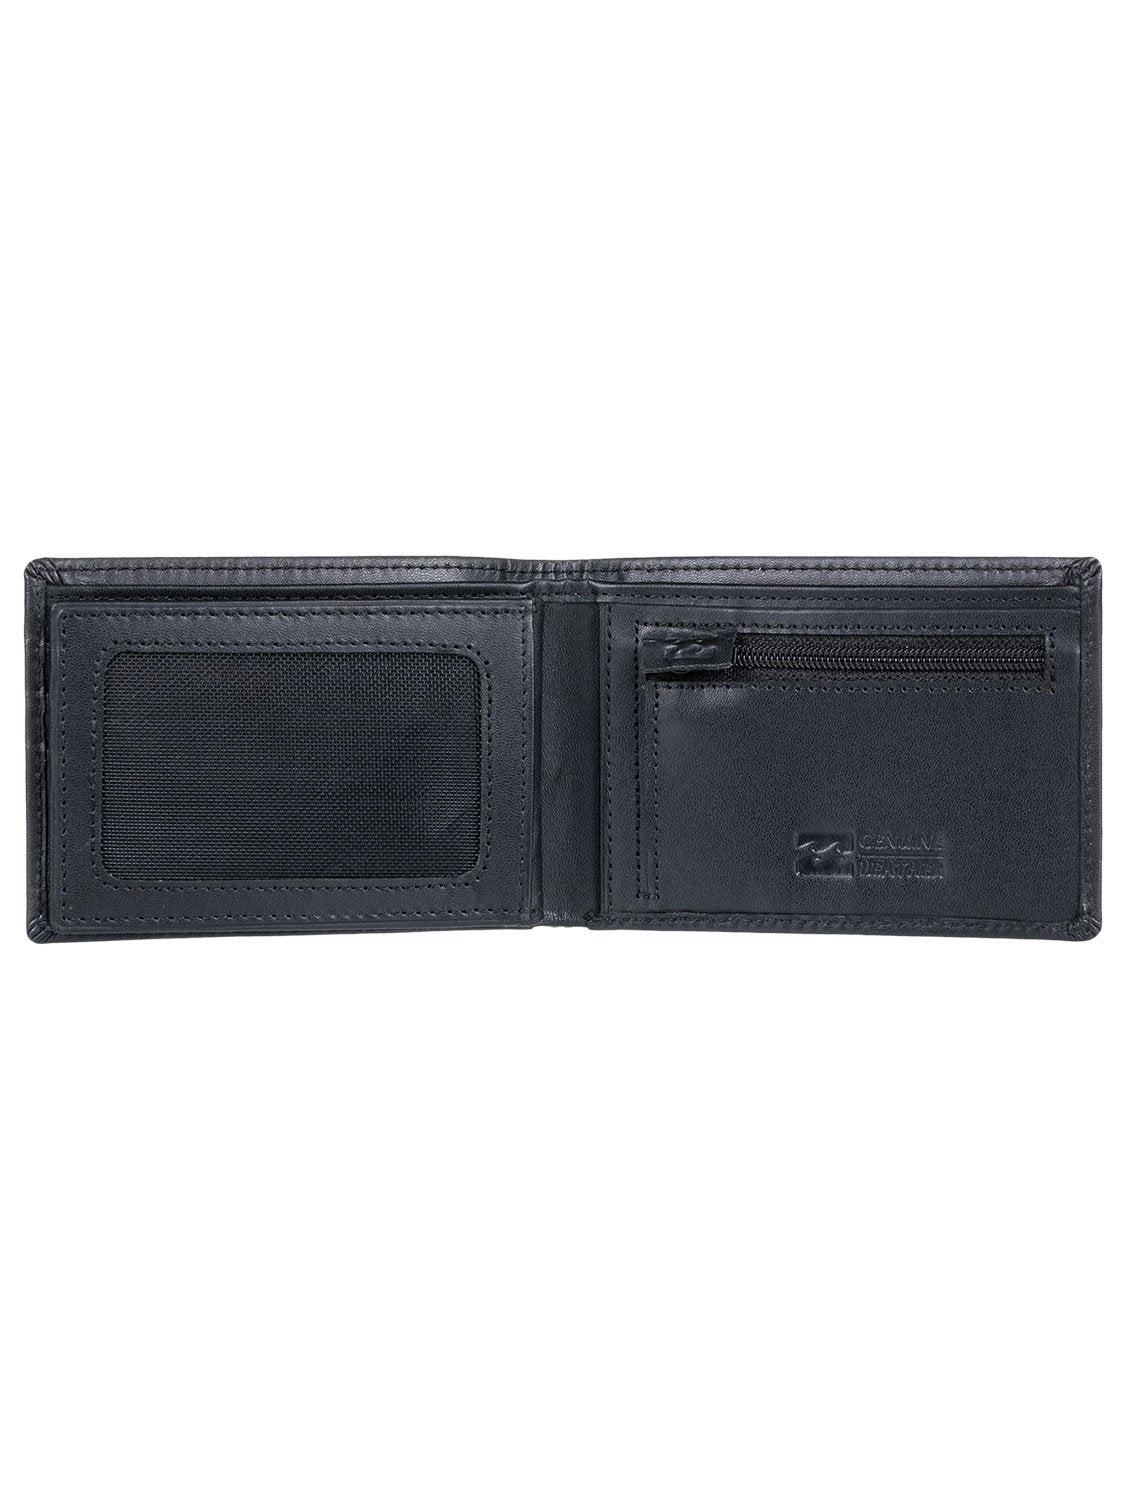 Billabong Men's Arch Leather Wallet